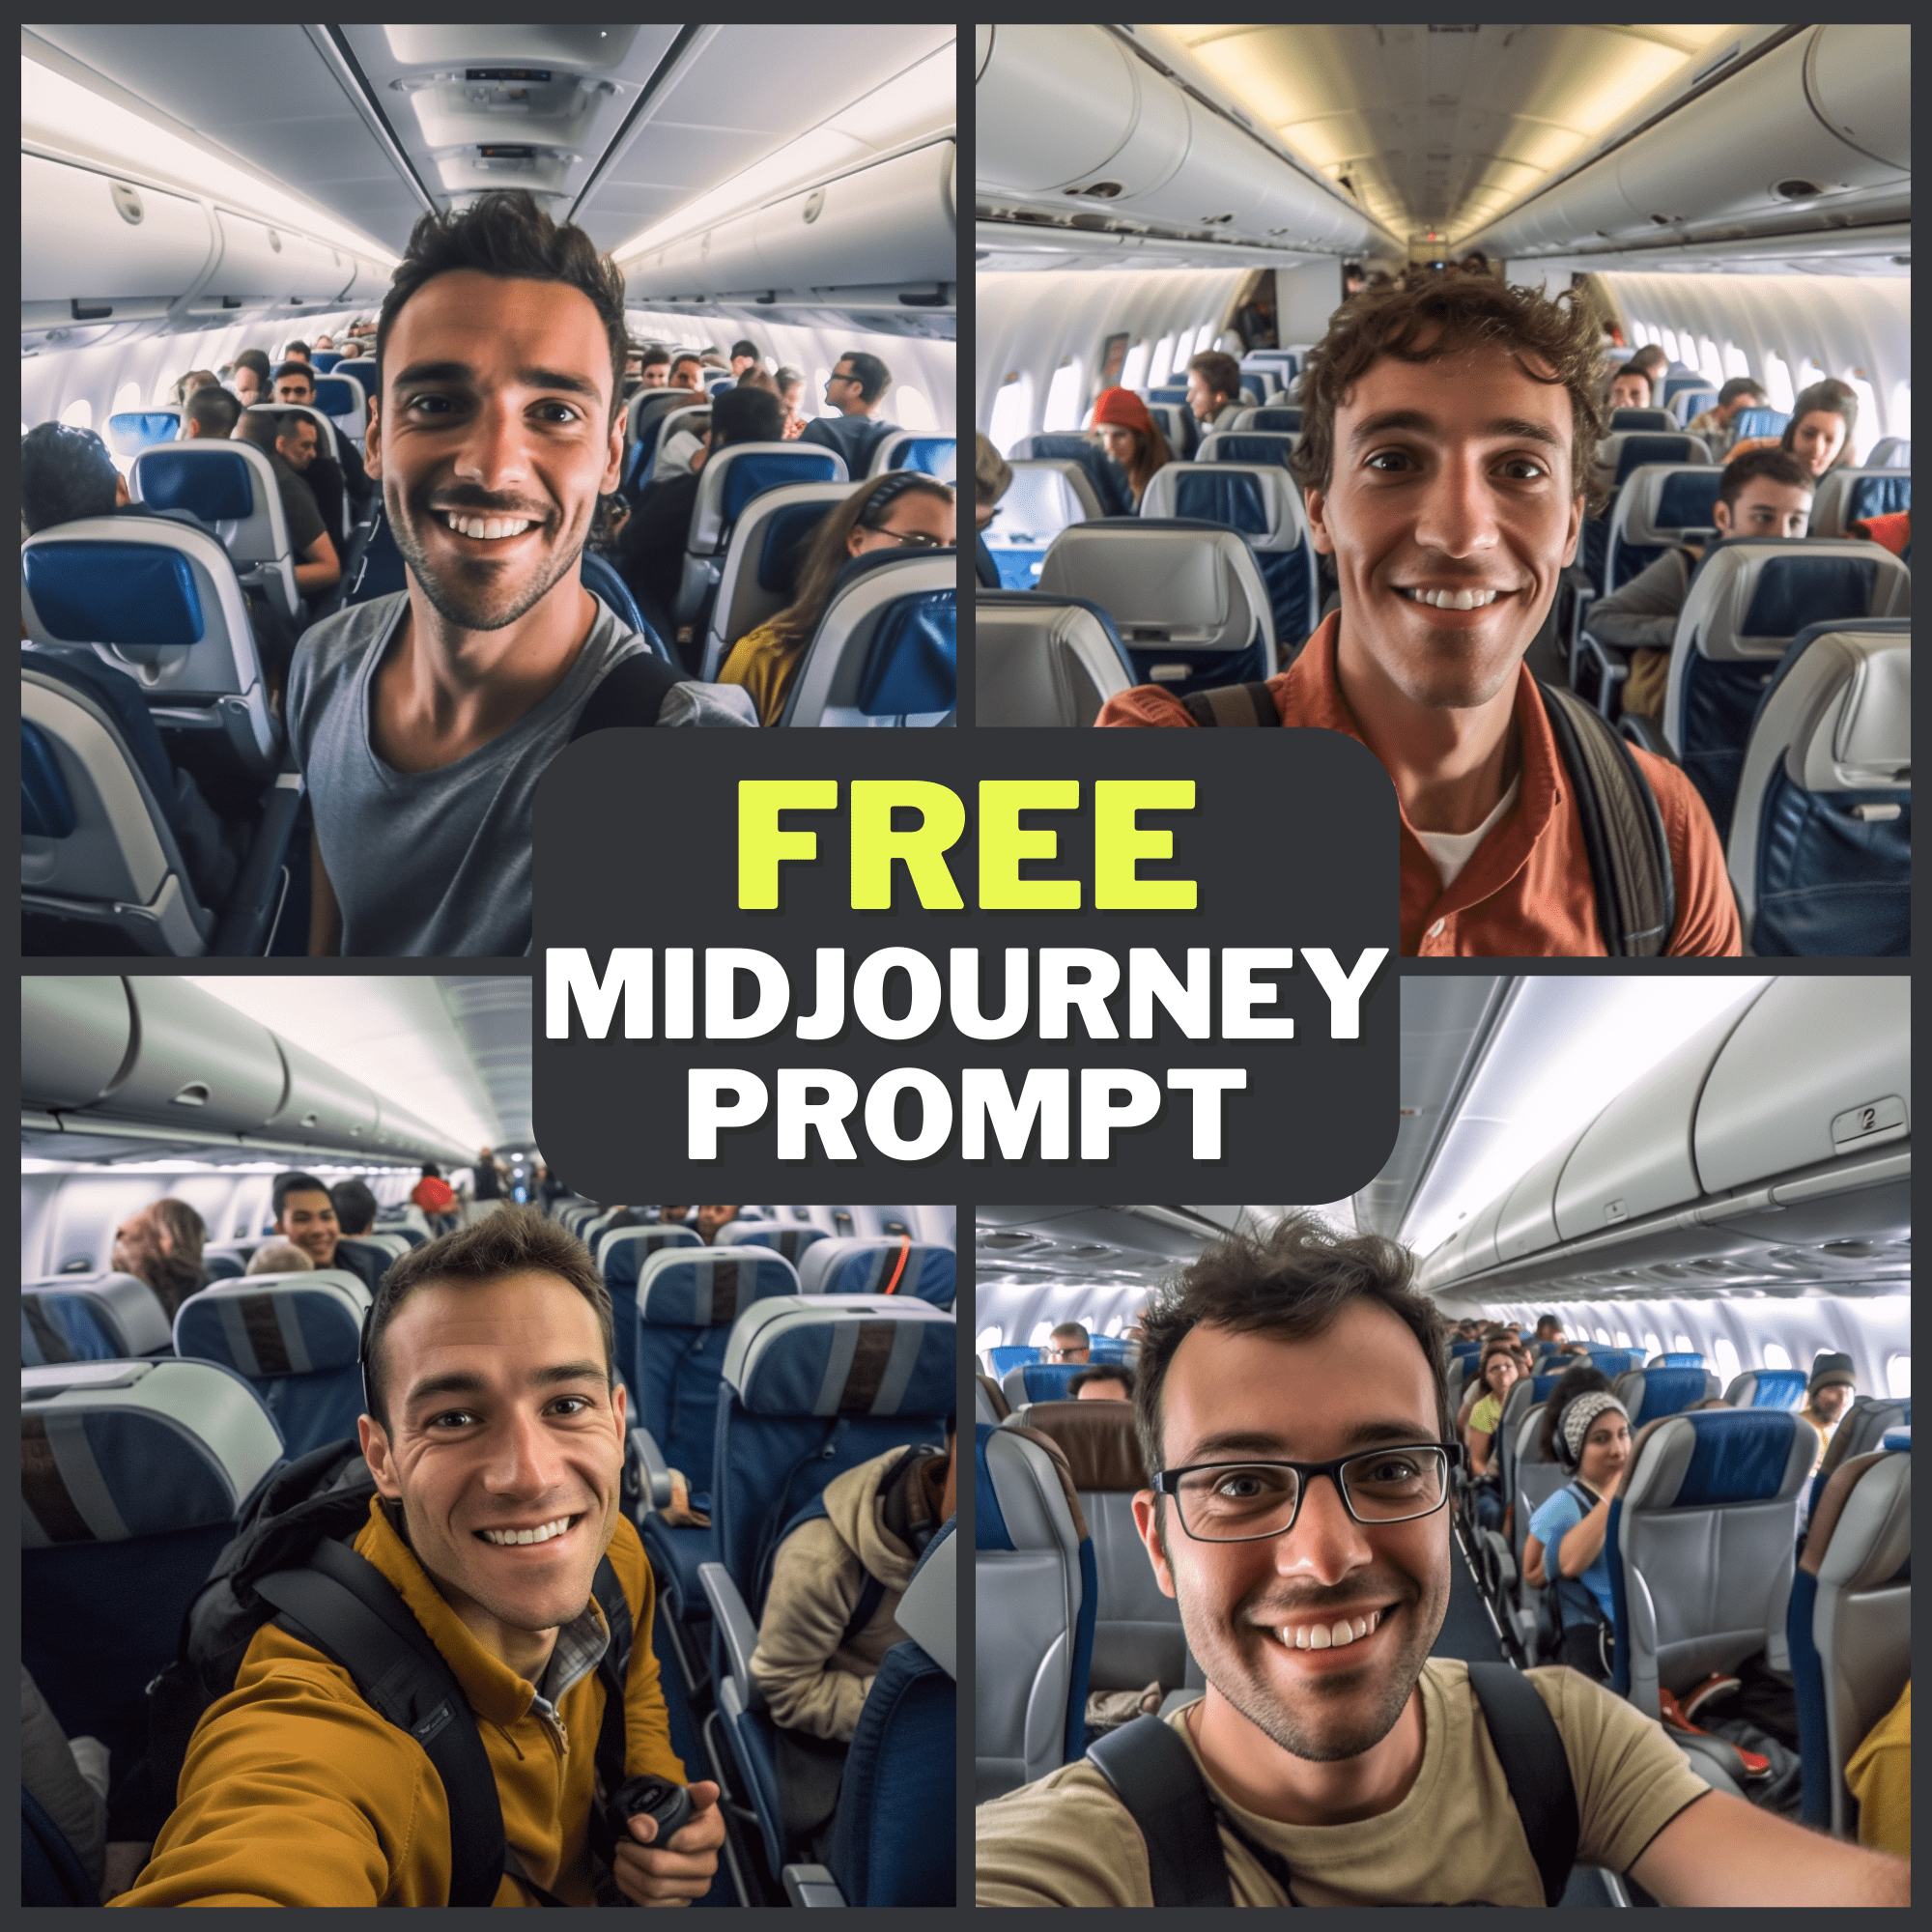 Selfie Inside Plane Free Midjourney Prompt